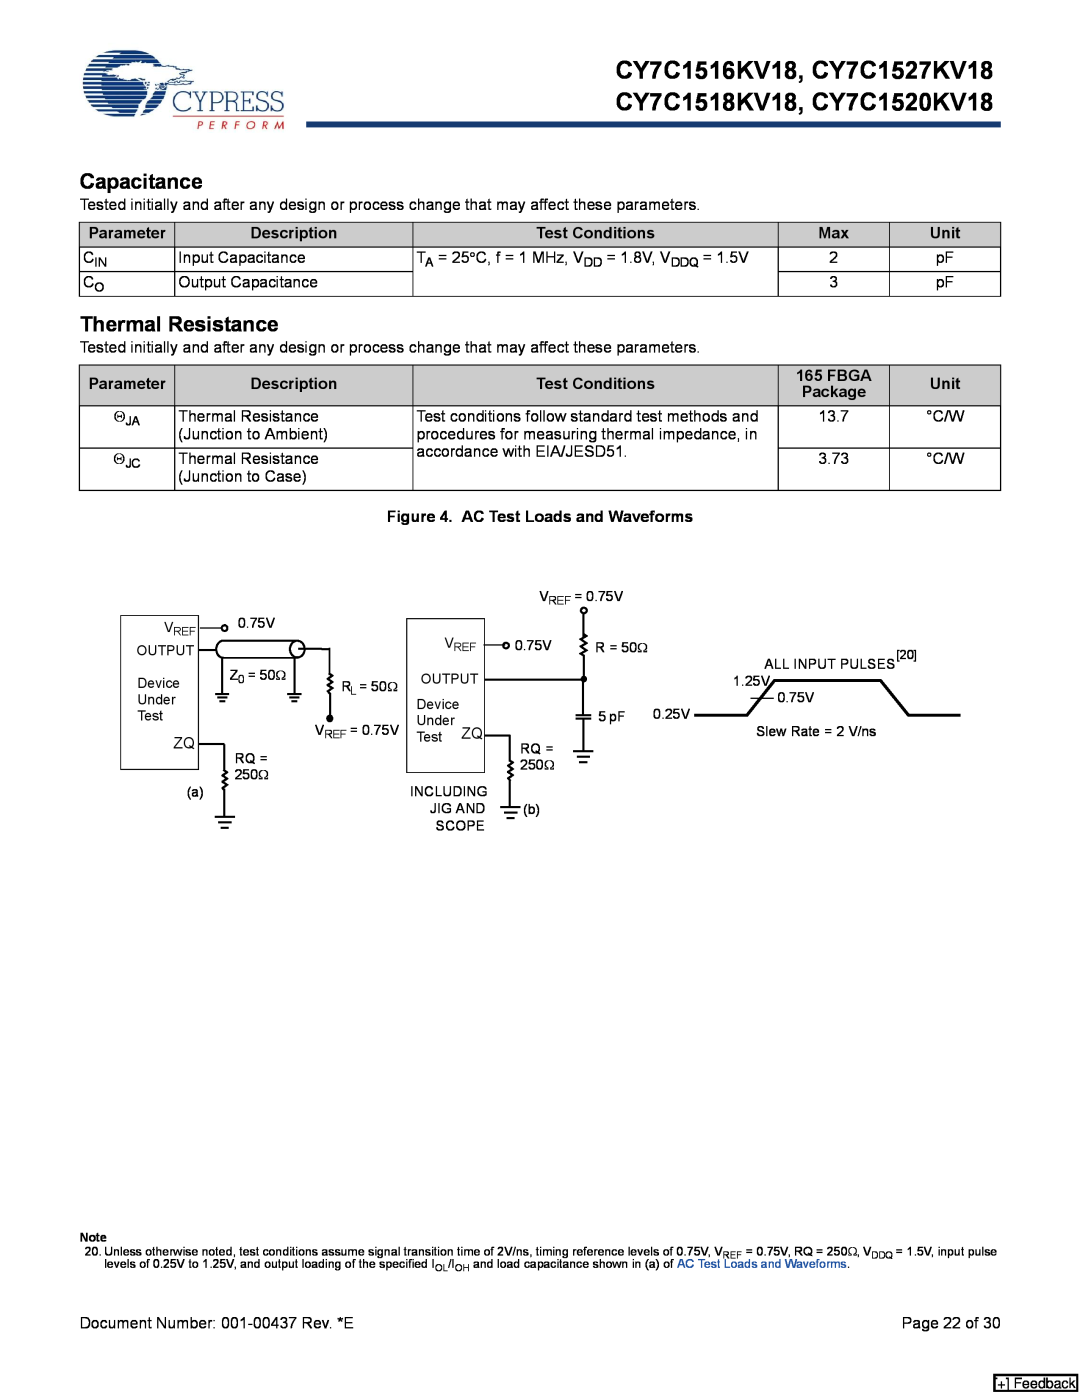 Cypress manual Capacitance, Thermal Resistance, CY7C1516KV18, CY7C1527KV18 CY7C1518KV18, CY7C1520KV18, Package 